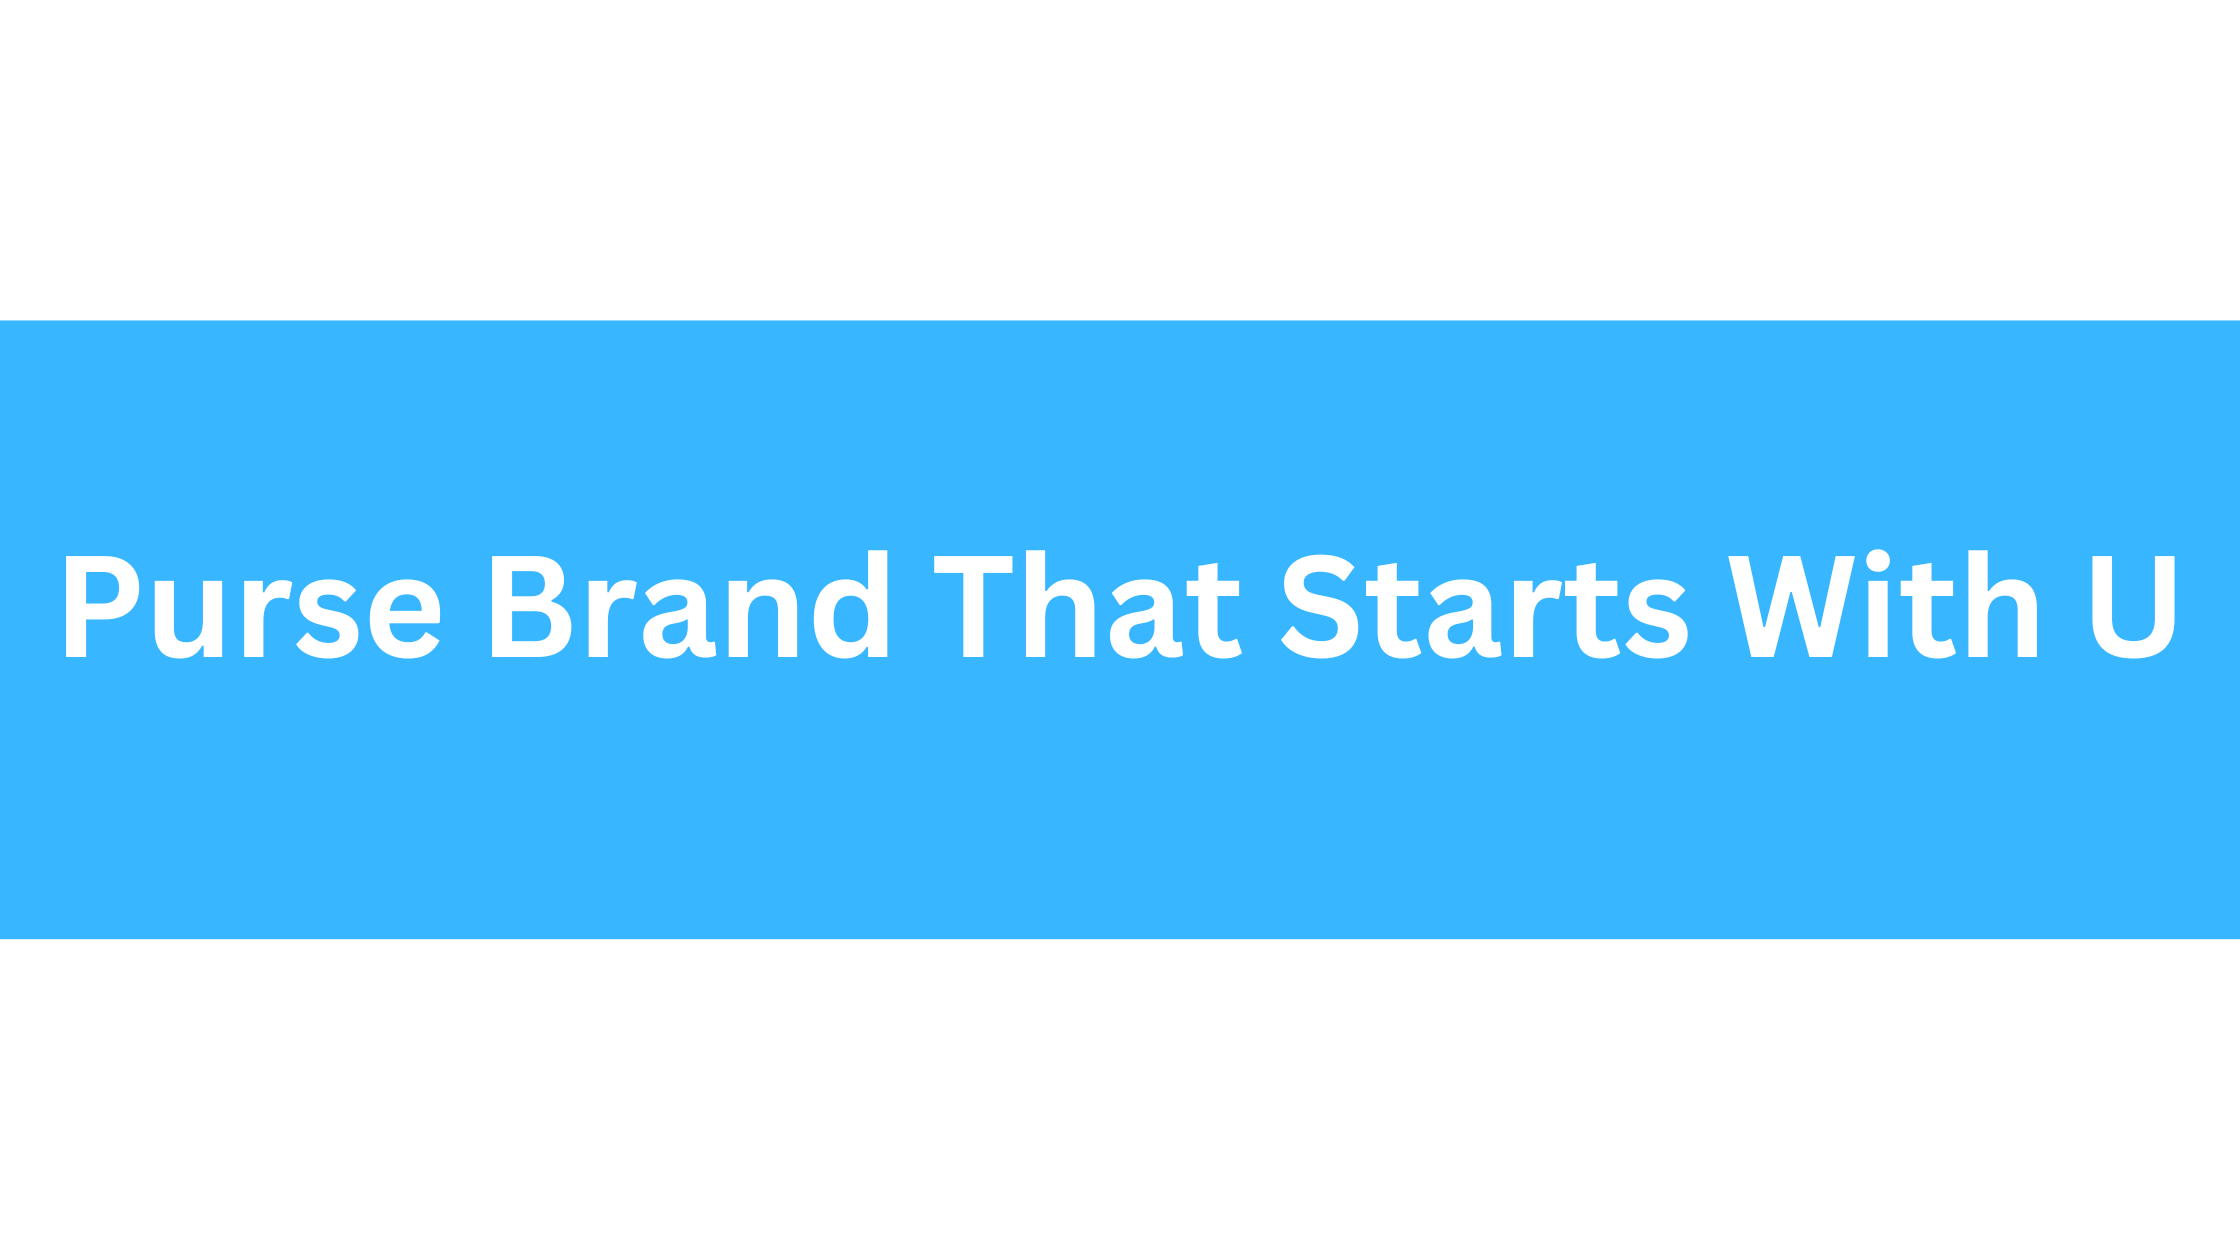 Purse Brand That Starts With U